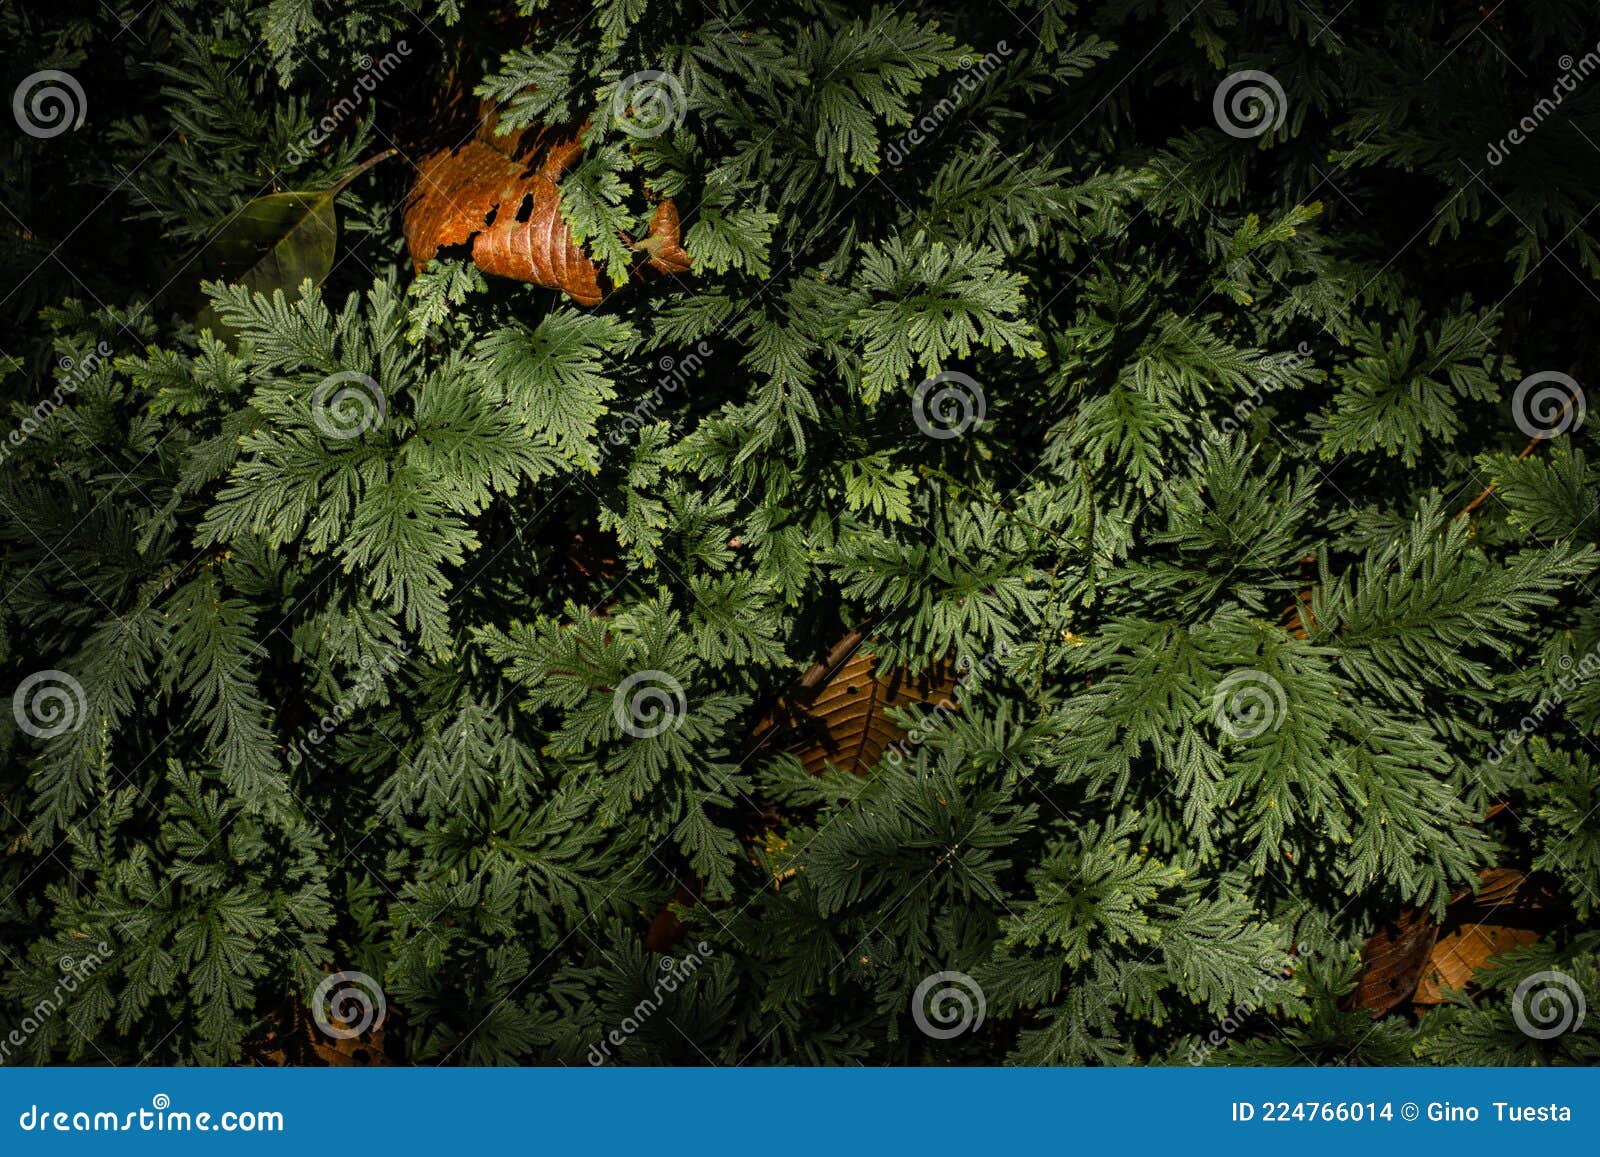 lush ferns in the amazon rainforest of peru